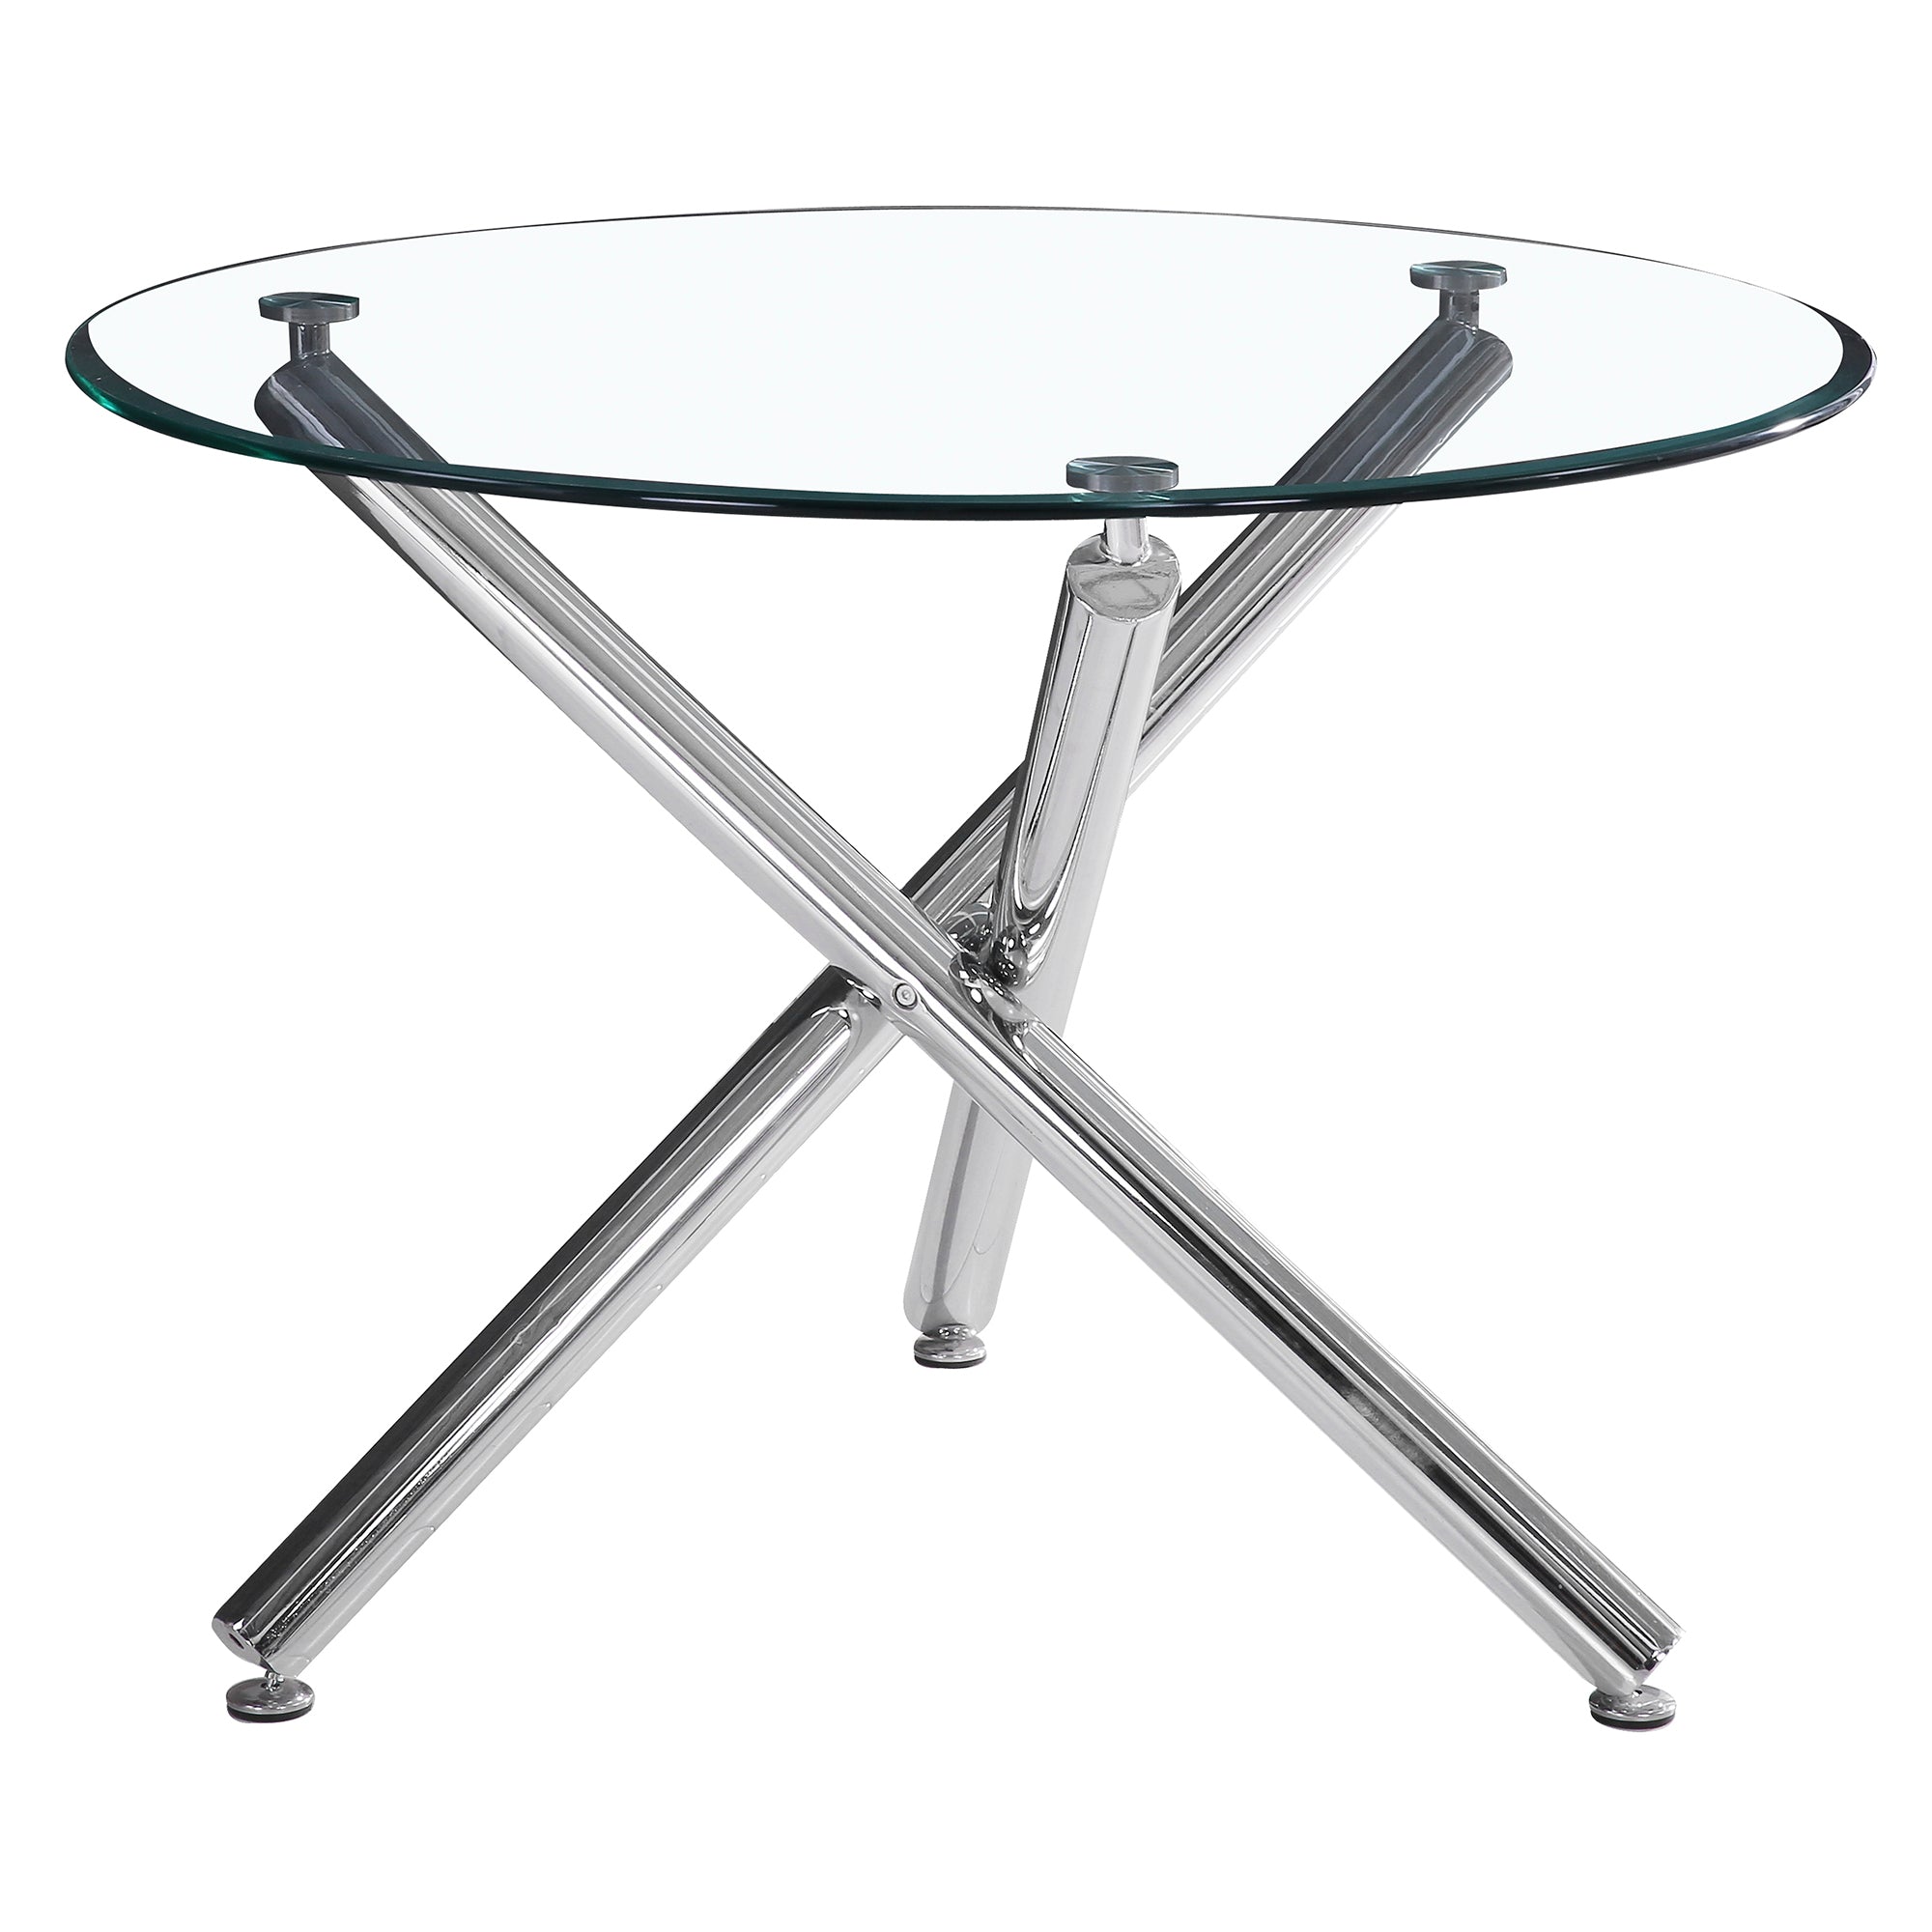 SOLARA II-DINING TABLE, 40"DIA - CHROME / MAXIM BLACK CHAIRS - 5PC DINING SET